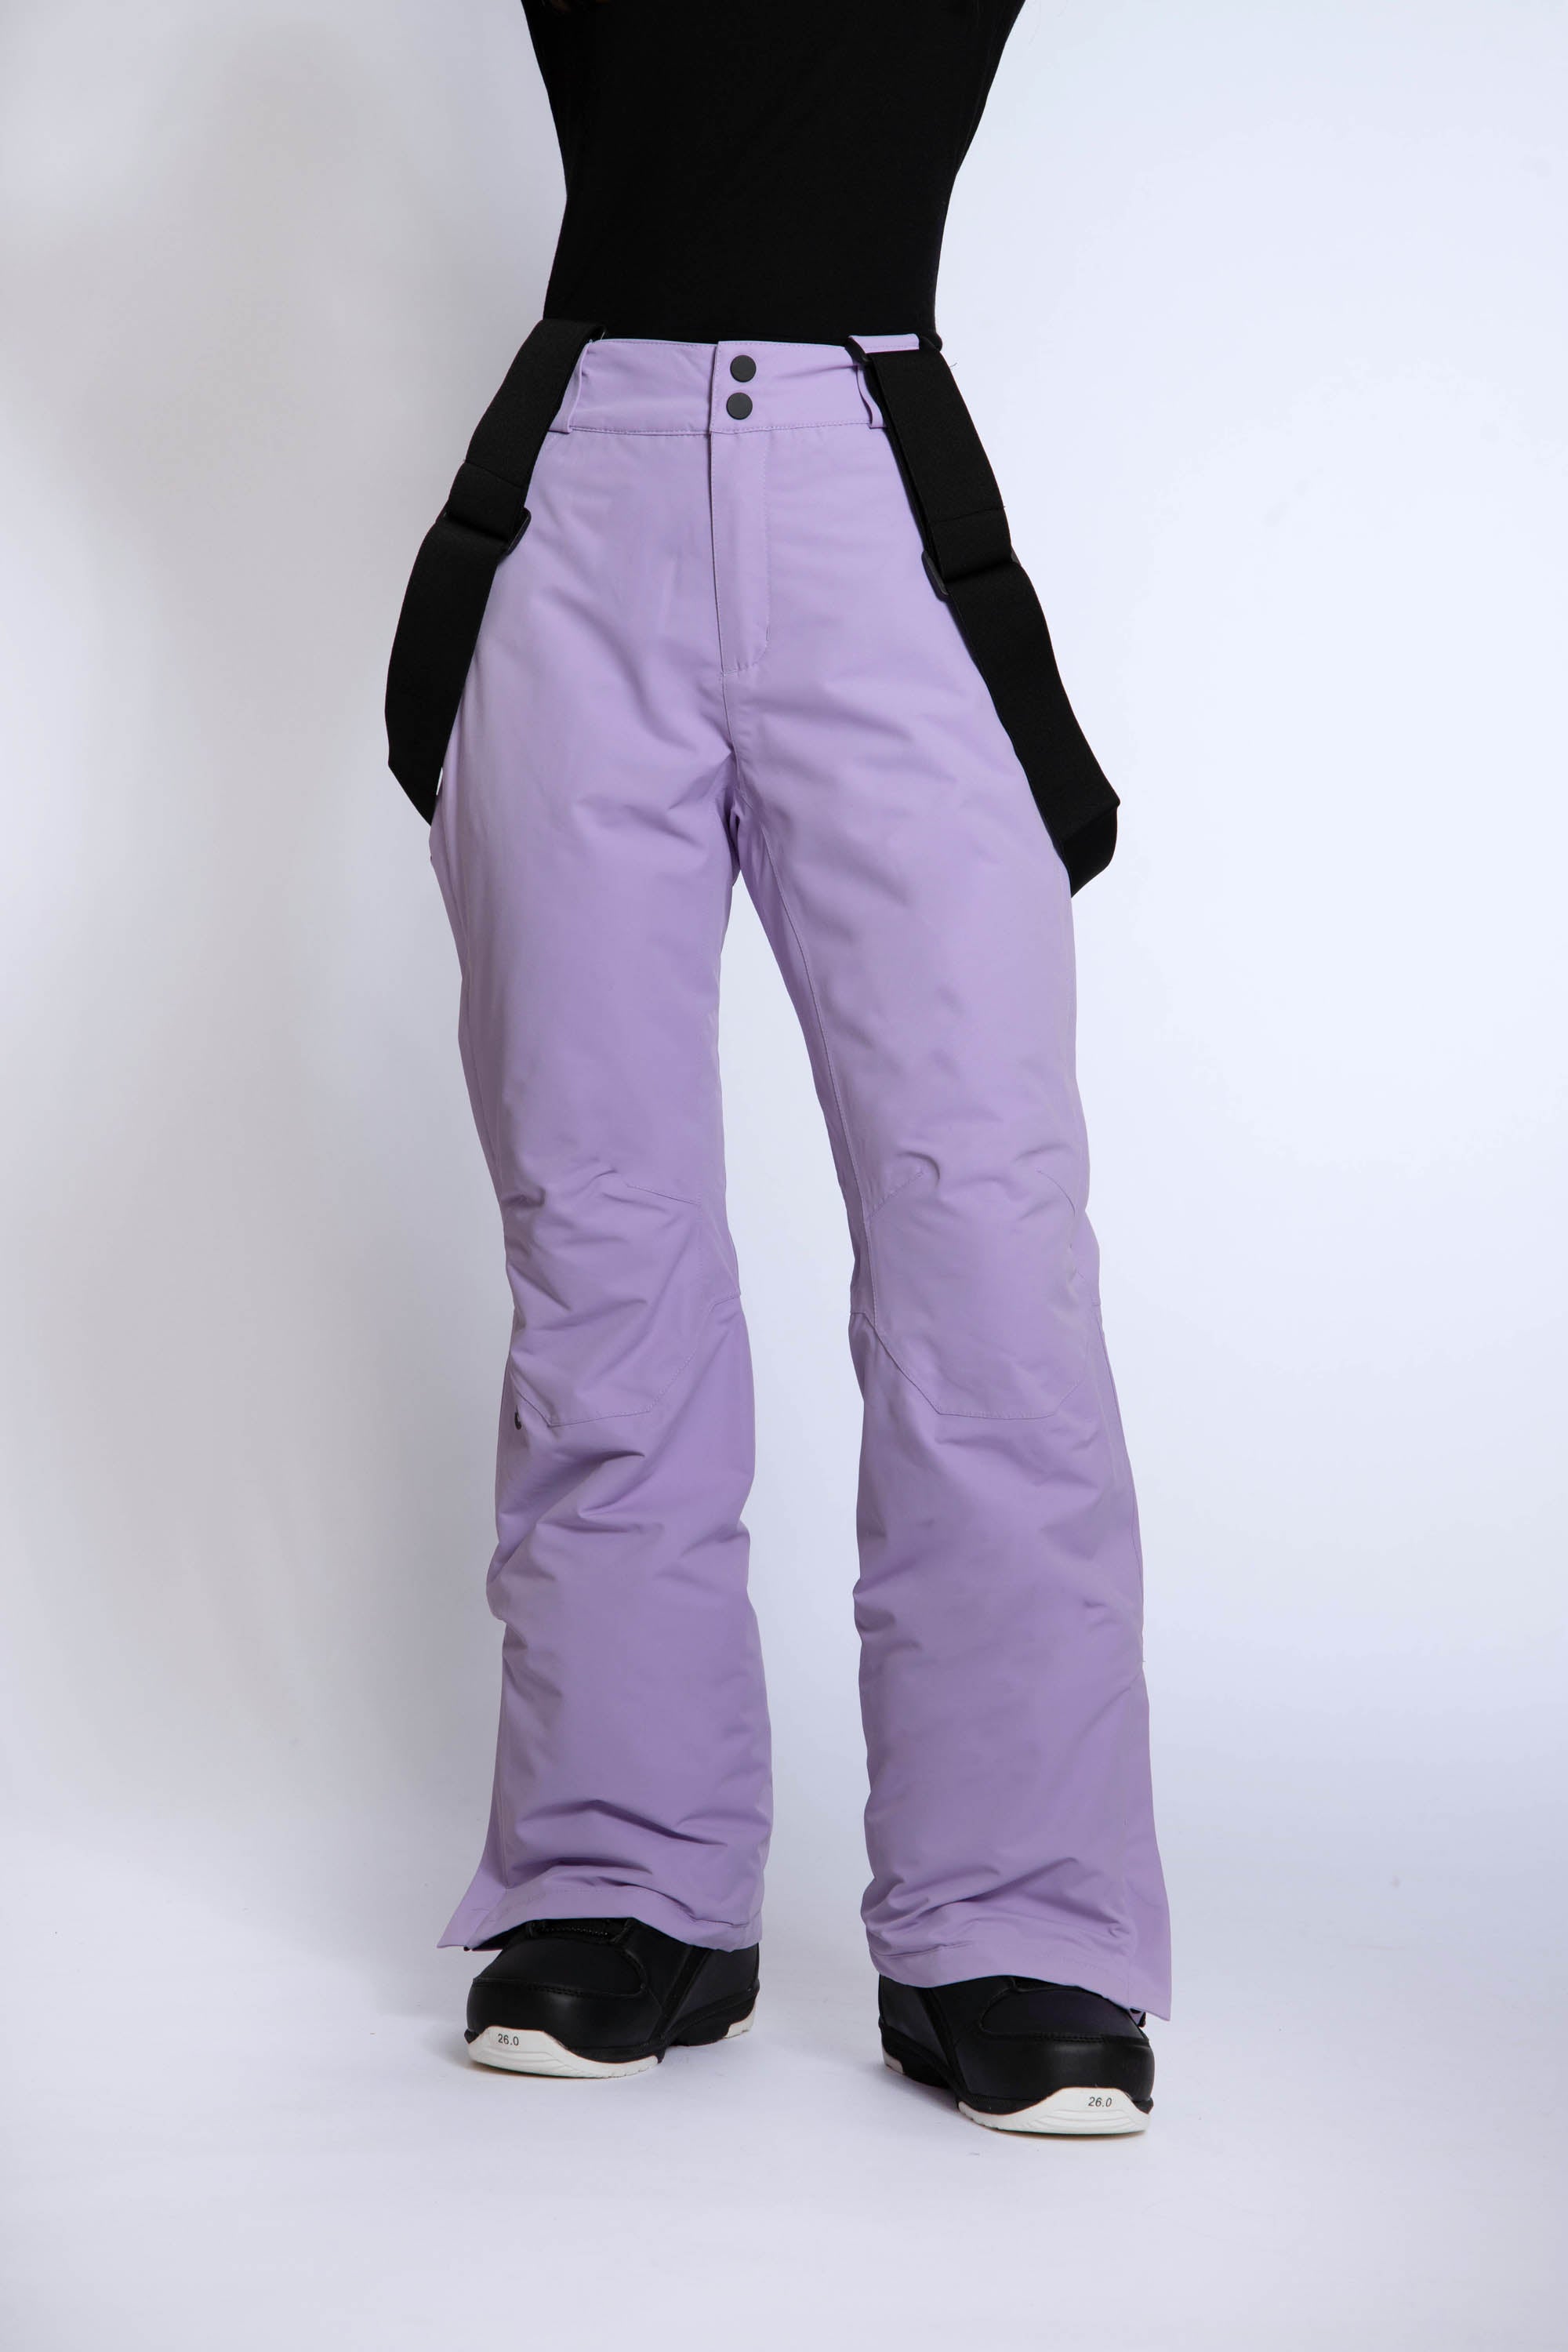 Renewed - Terra Ski Pants Pale Violet - Extra small - Women's